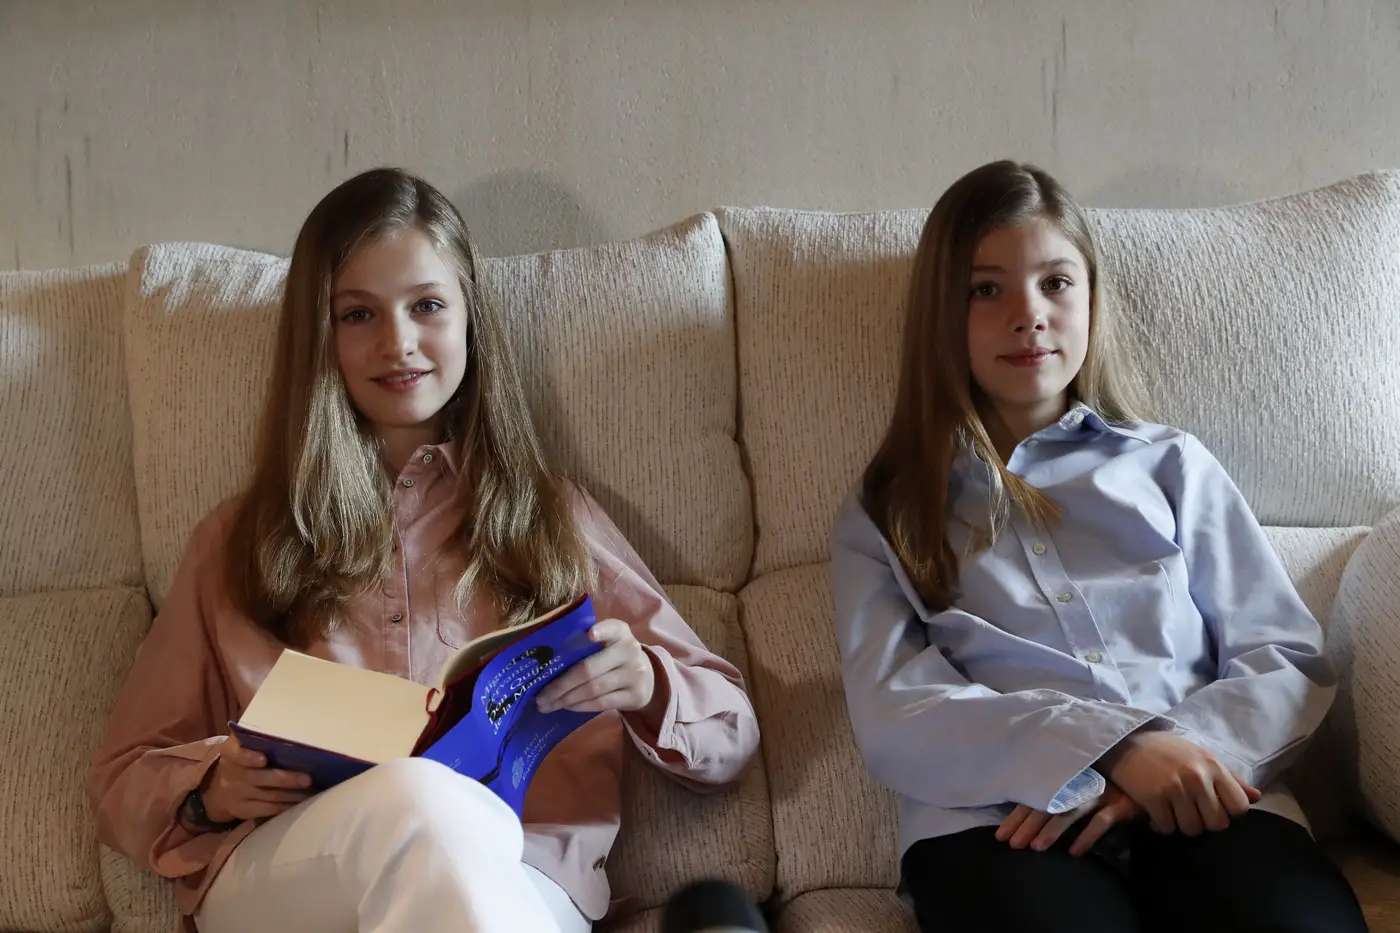 Princess Leonor and Infanta Sofia participated in the Book Reading